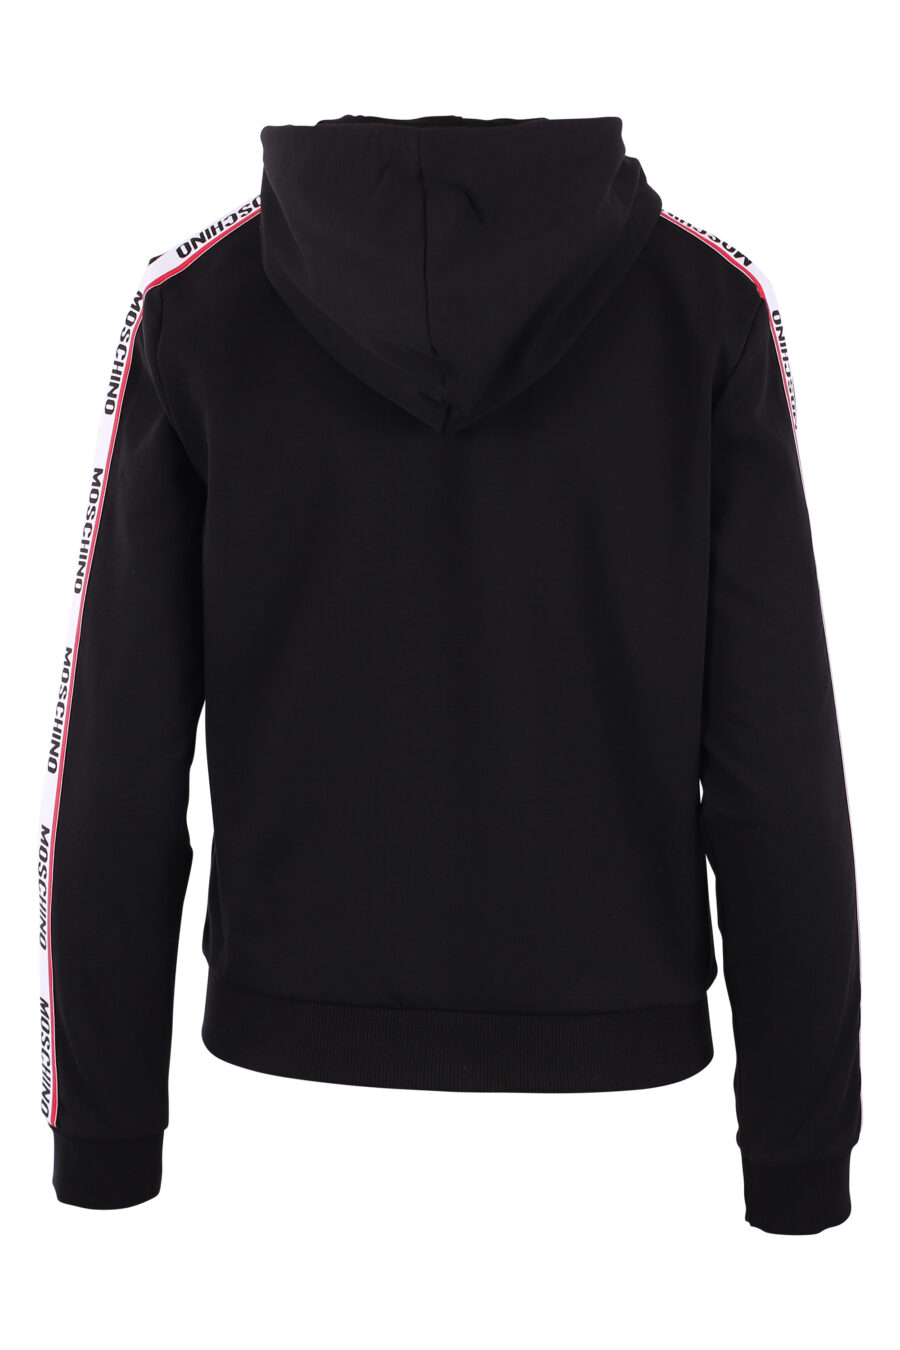 Schwarzes Kapuzensweatshirt mit monochromem Logo - IMG 6215